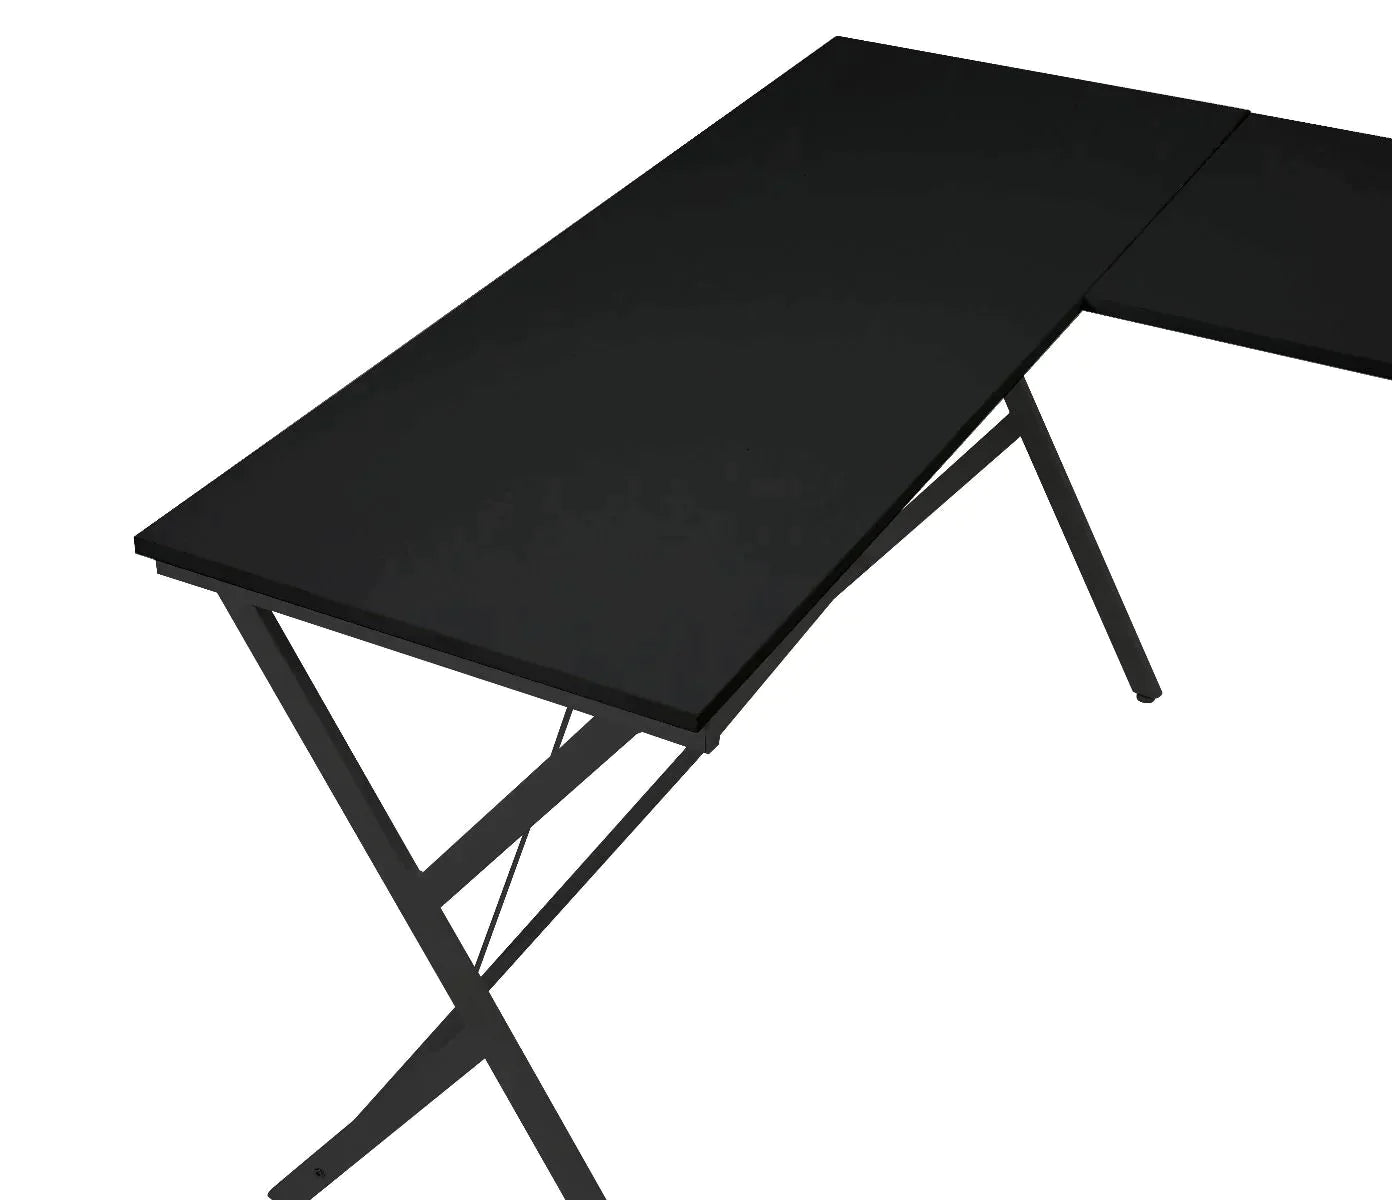 Dazenus Black Finish Desk Model OF00049 By ACME Furniture